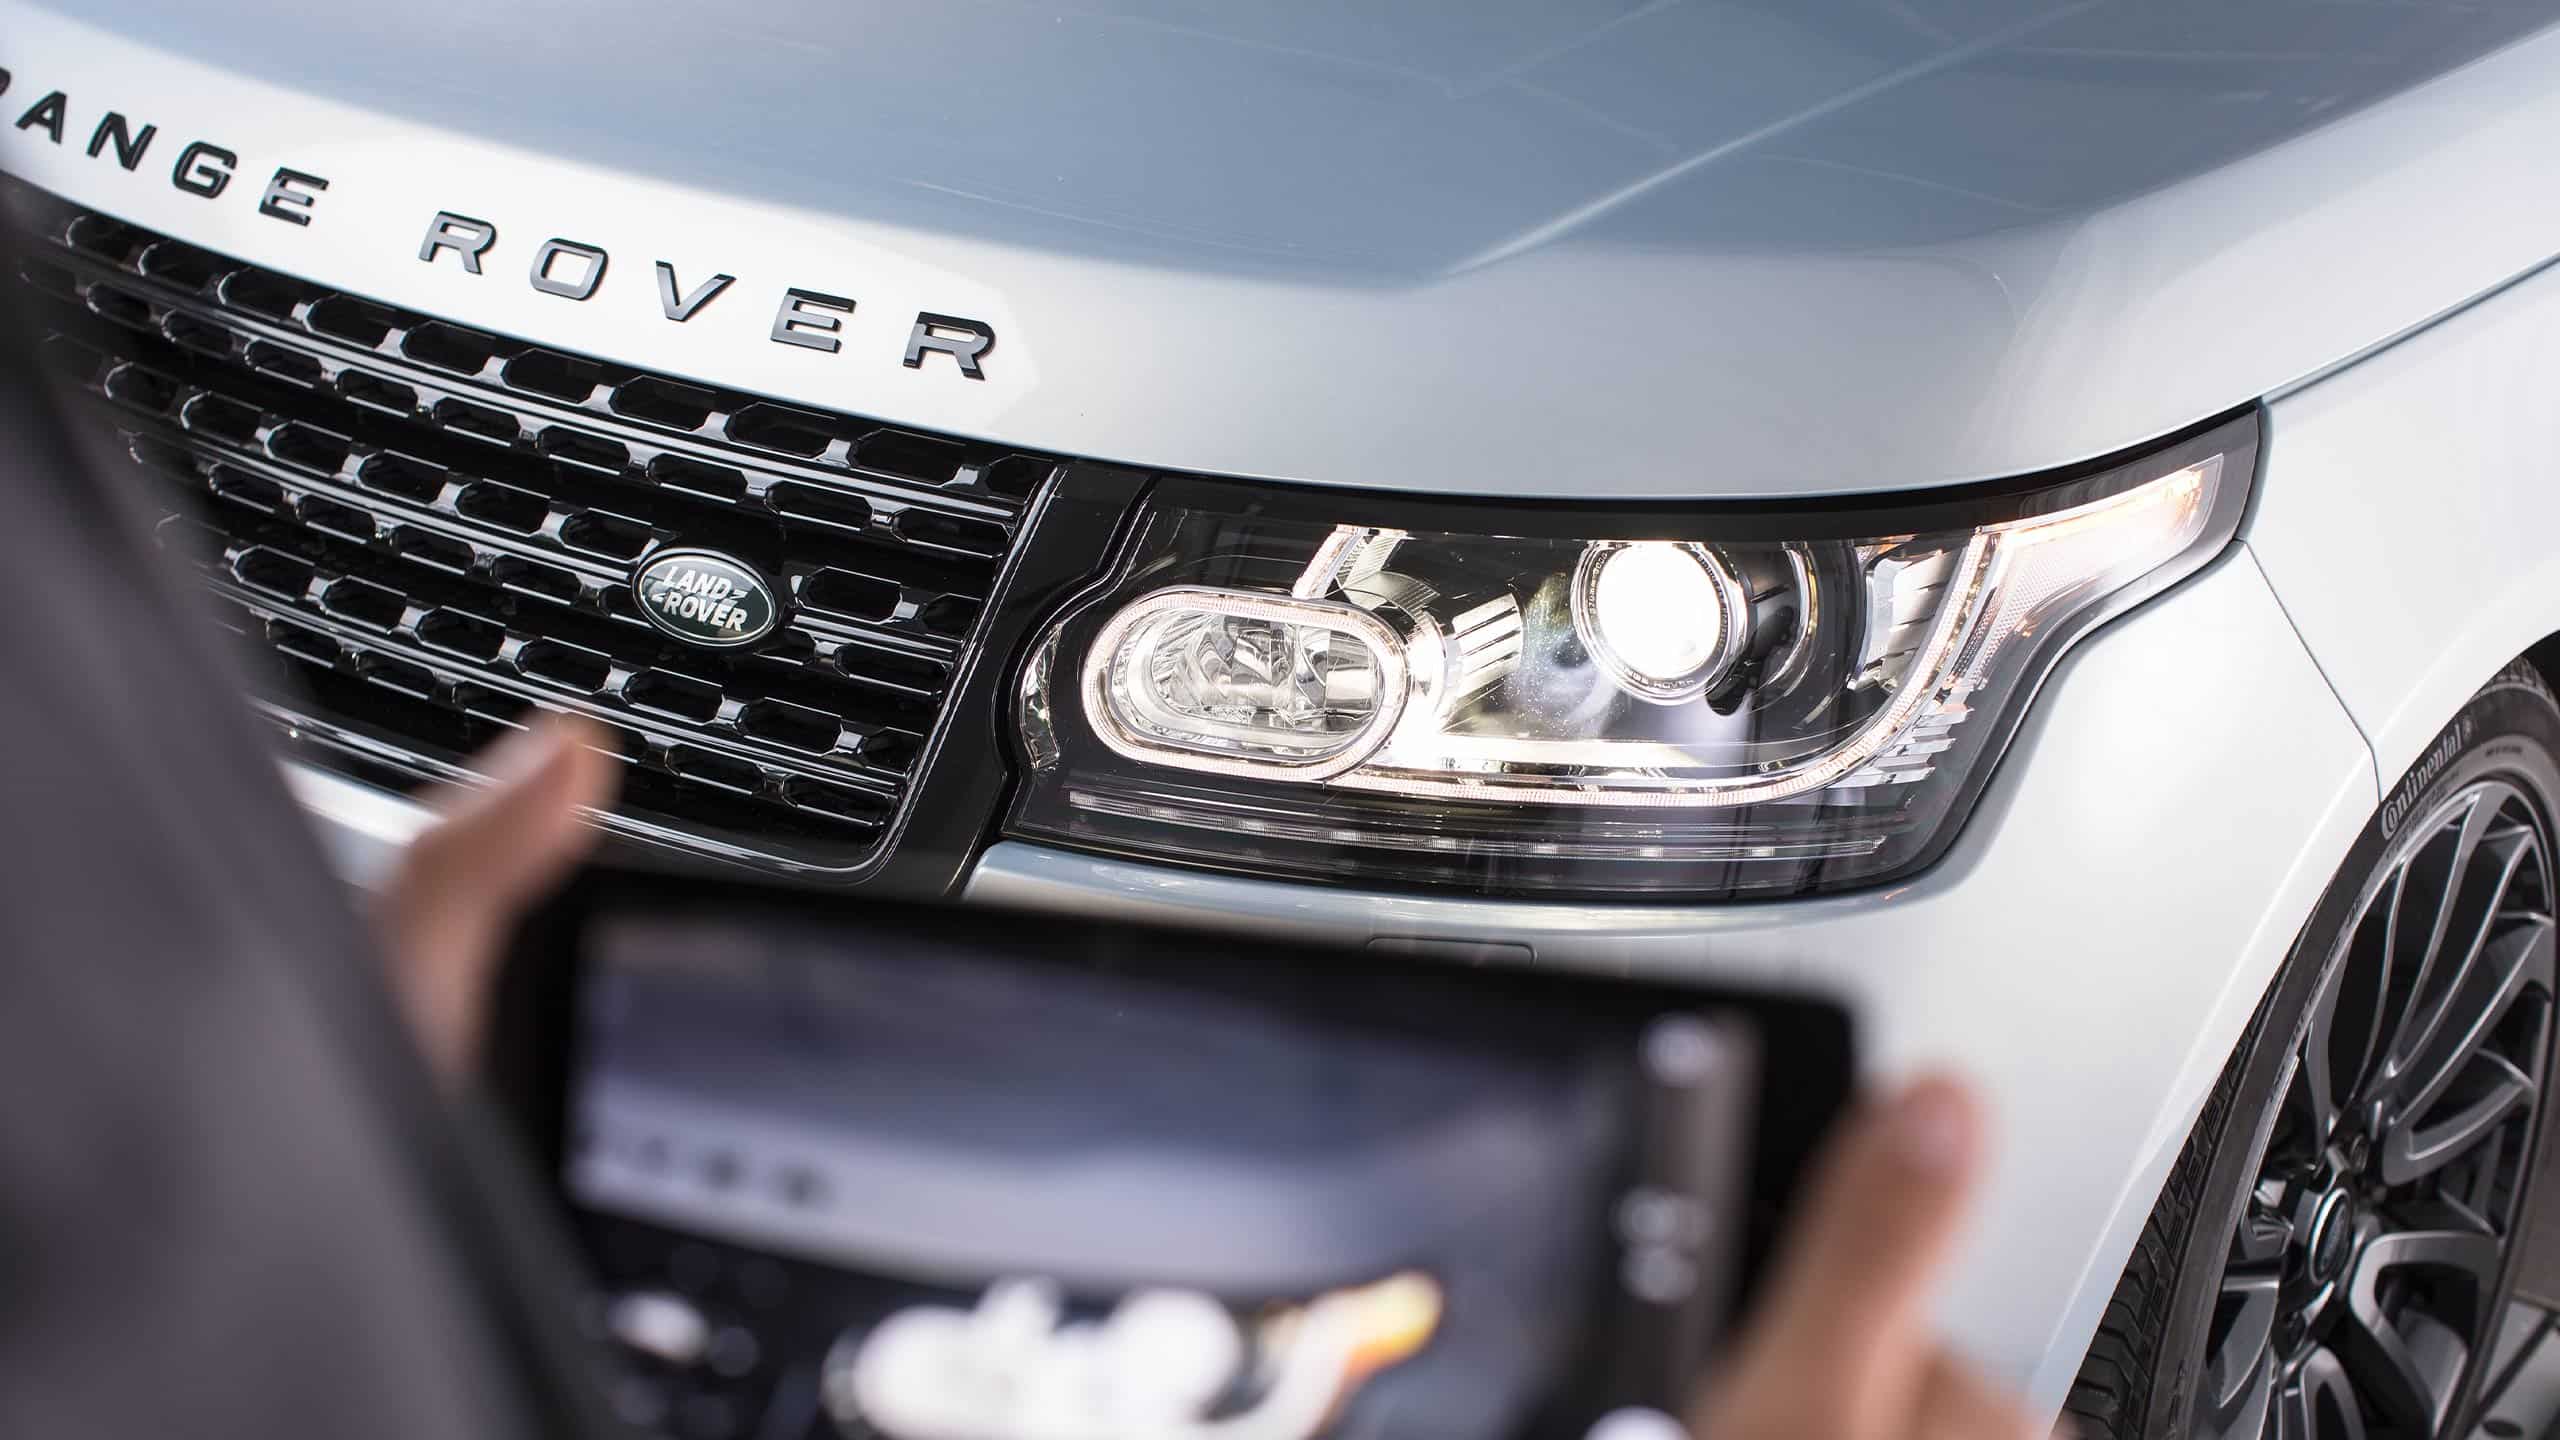 Land Rover eVHC Lights repair at workshop